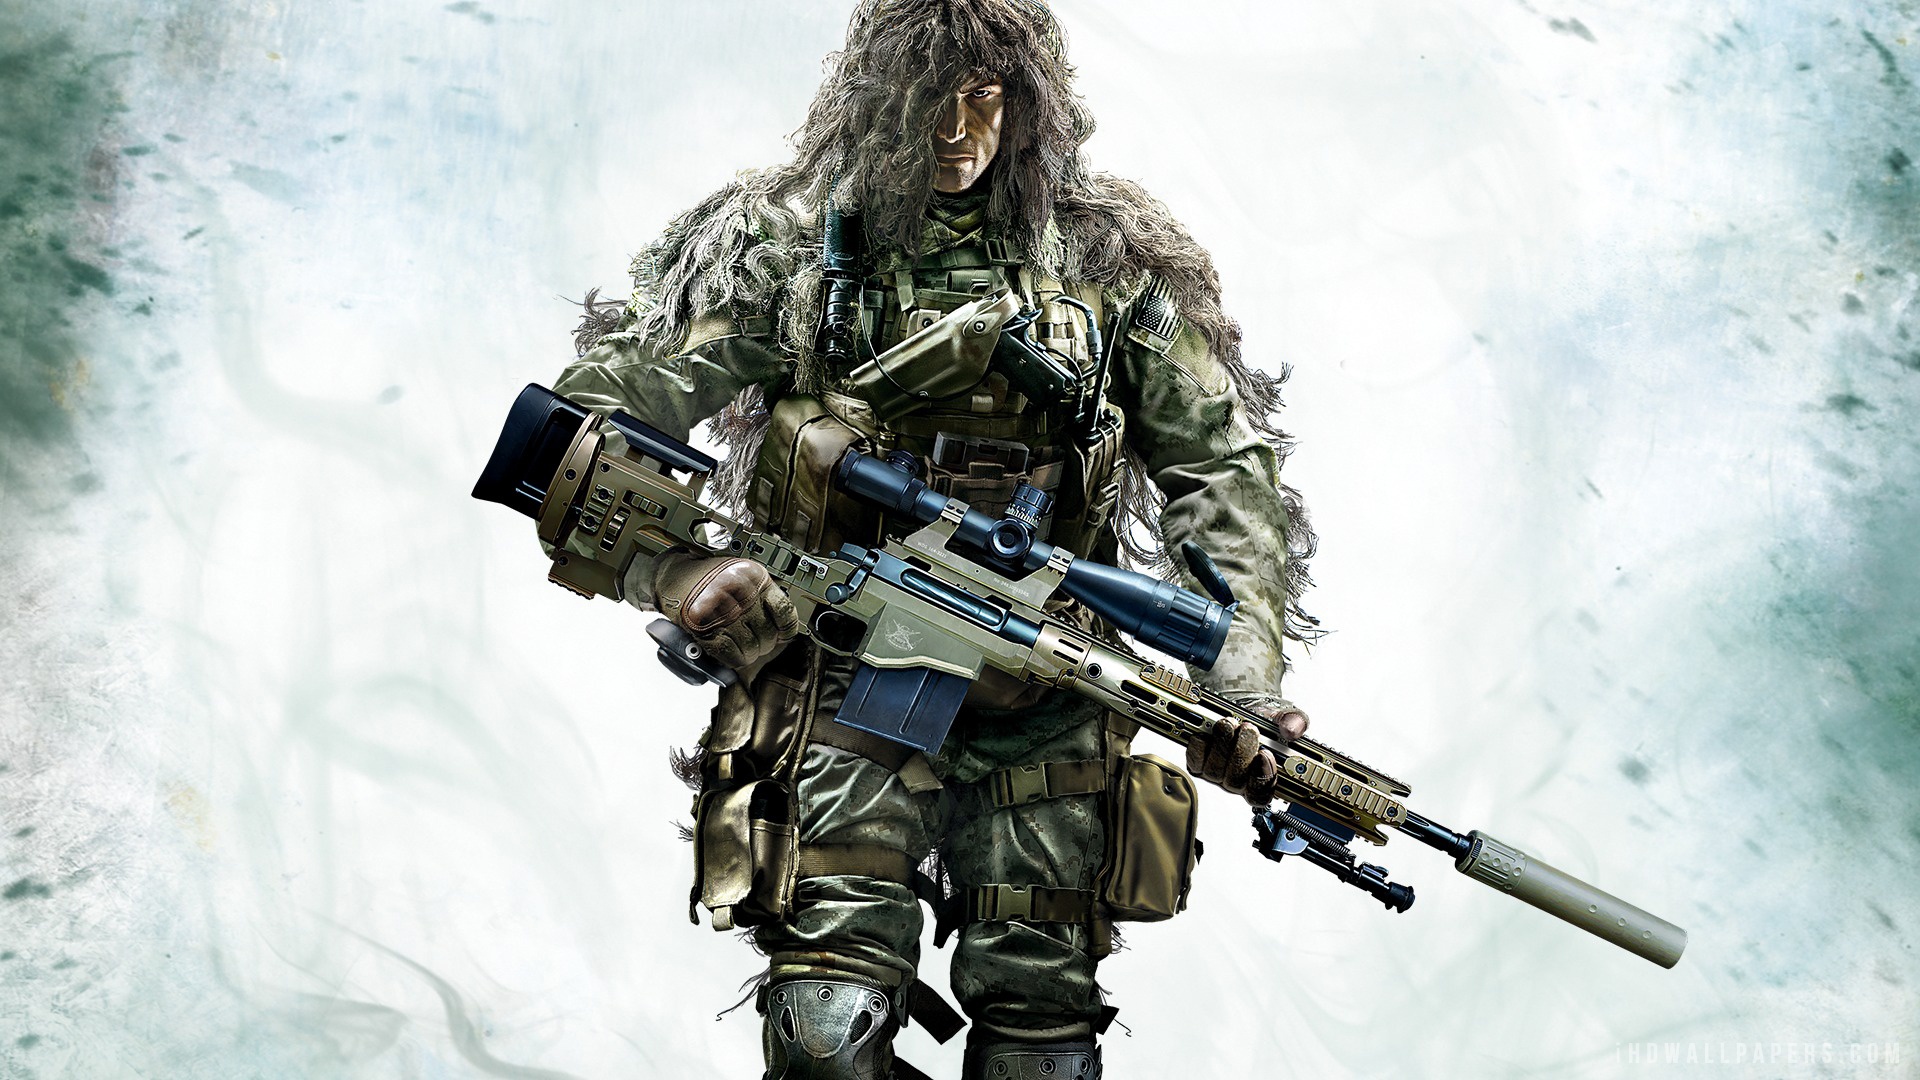 Sniper Ghost Warrior 2 Wallpaper Hd wallpaper   1221087 1920x1080